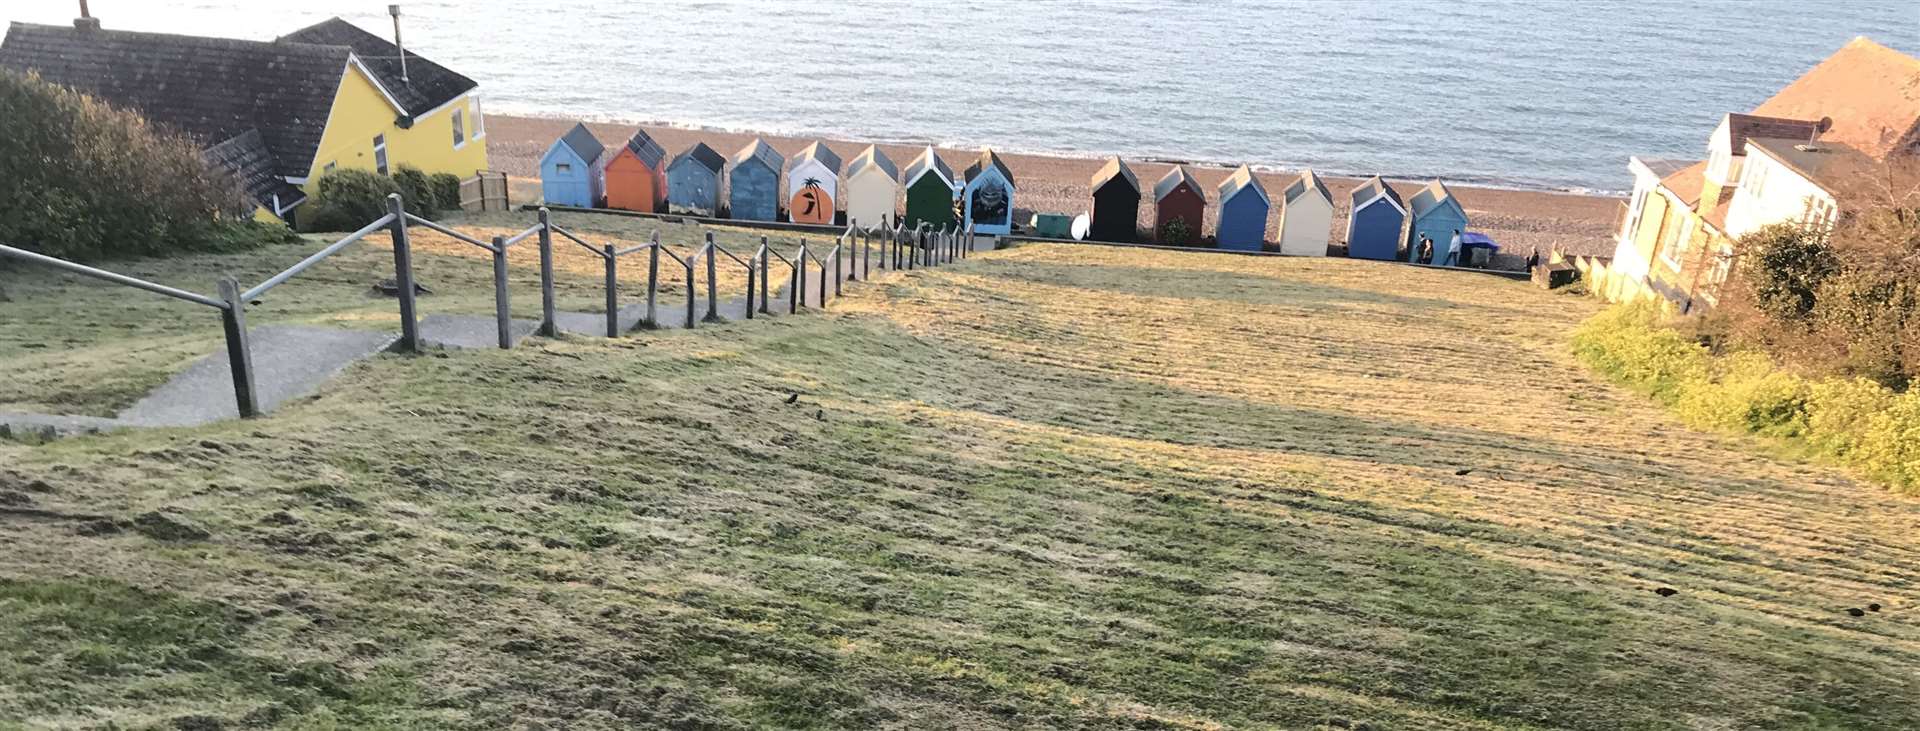 Beach huts overlooking the sea